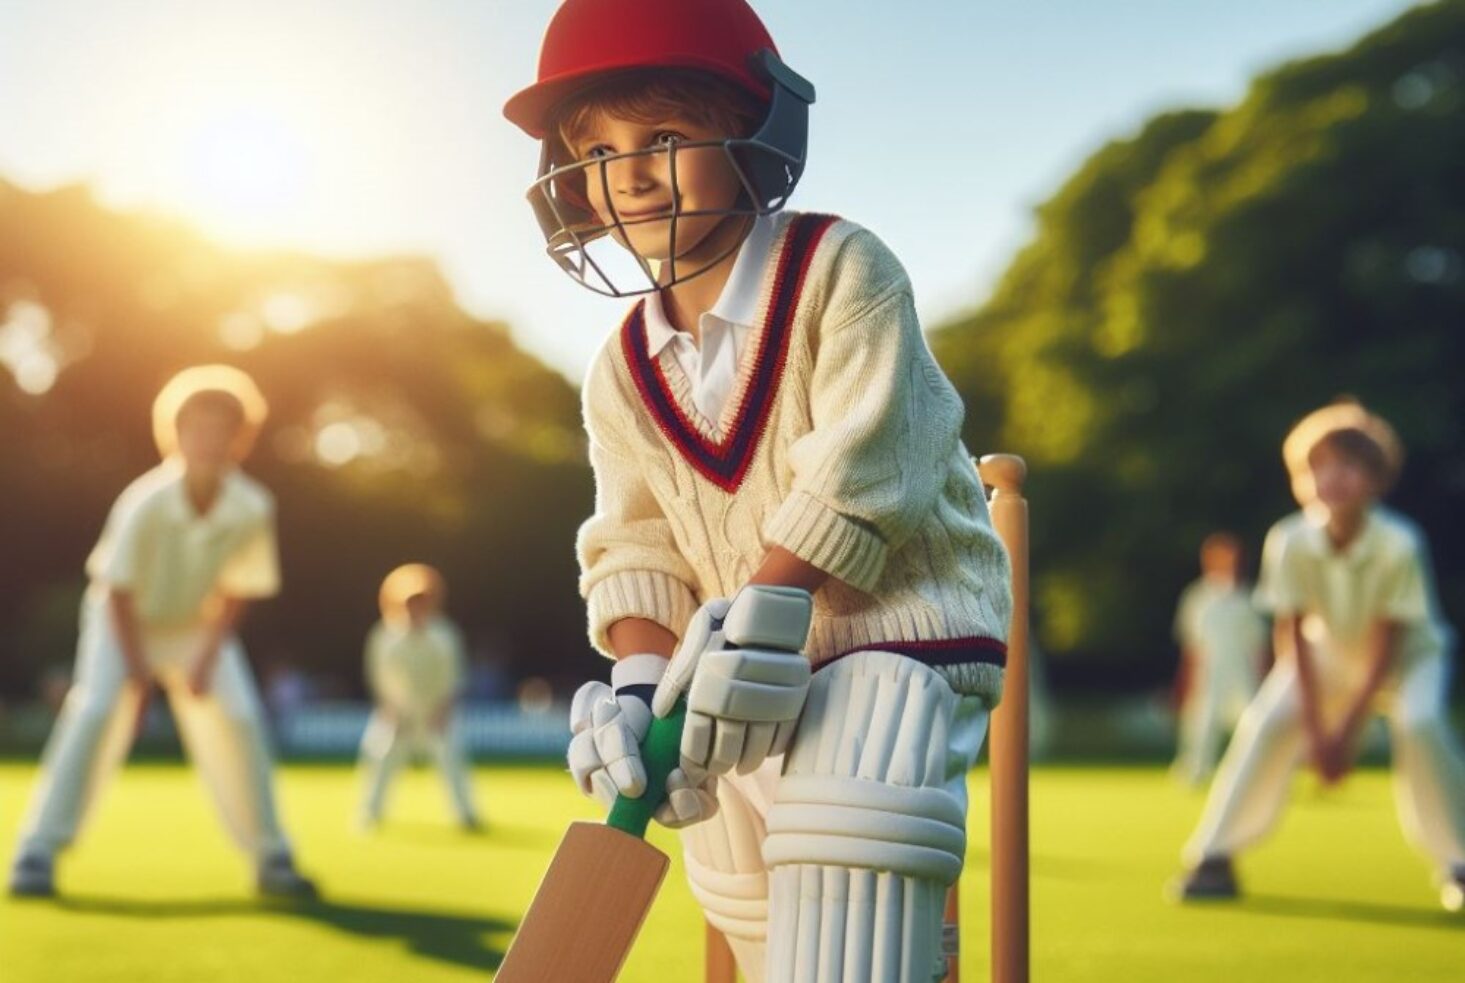 Cricket Equipment Suitable for Kids